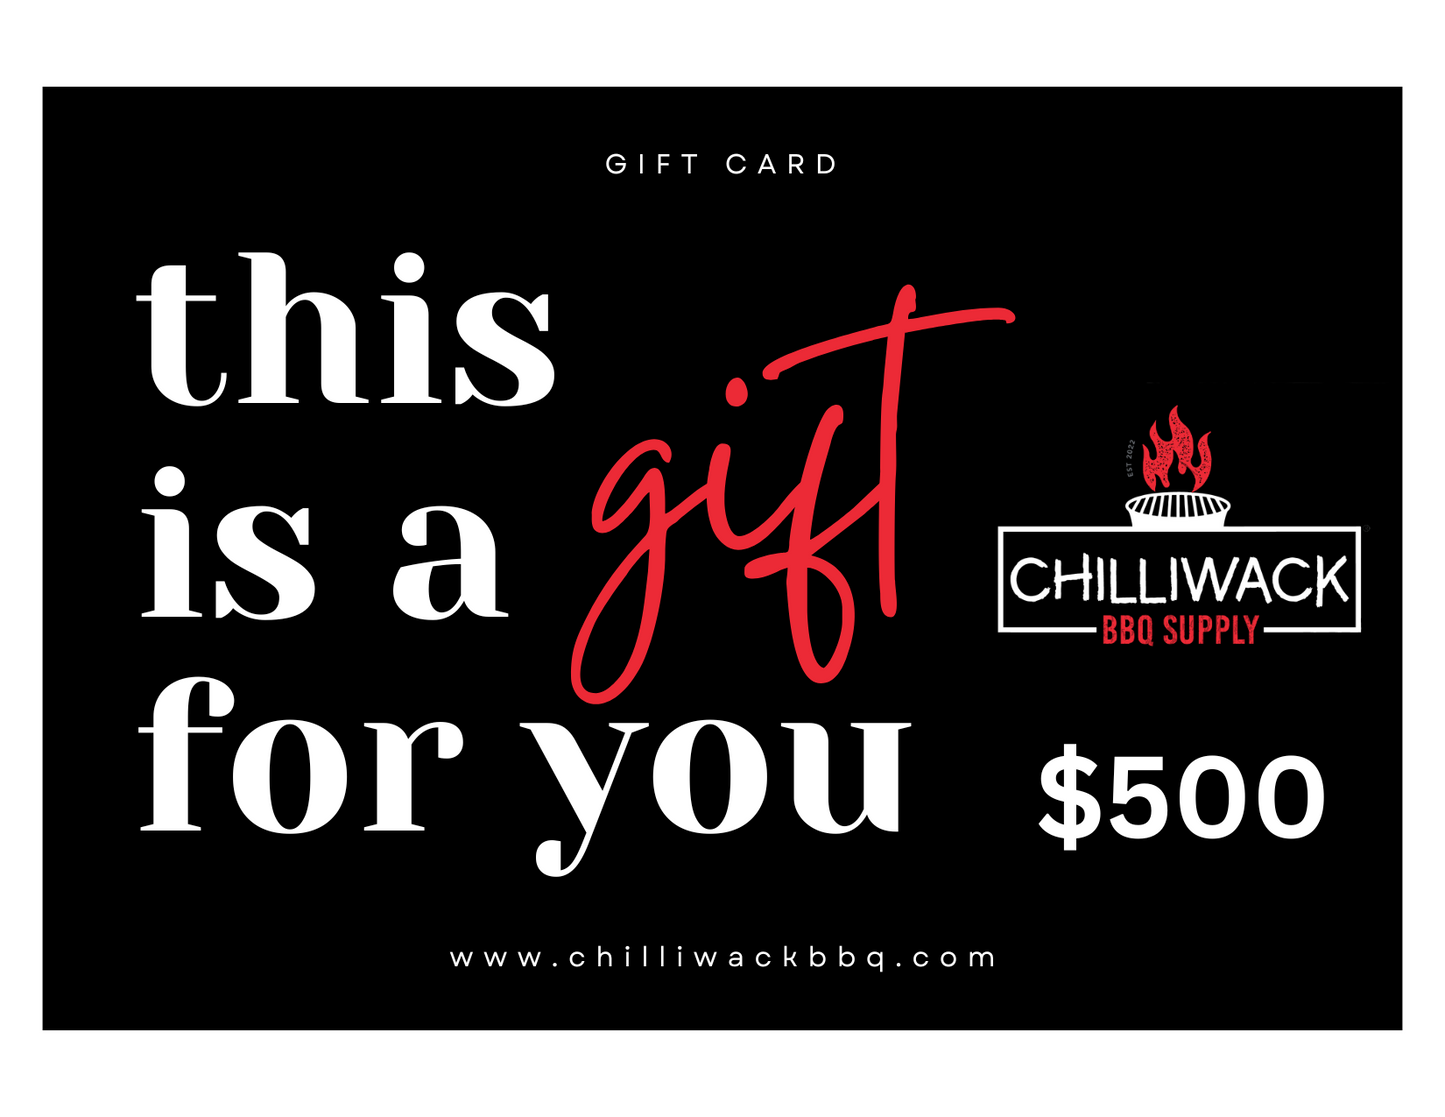 Chilliwack BBQ Supply E-GIFT CARD Chilliwack BBQ Supply Chilliwack BBQ Supply